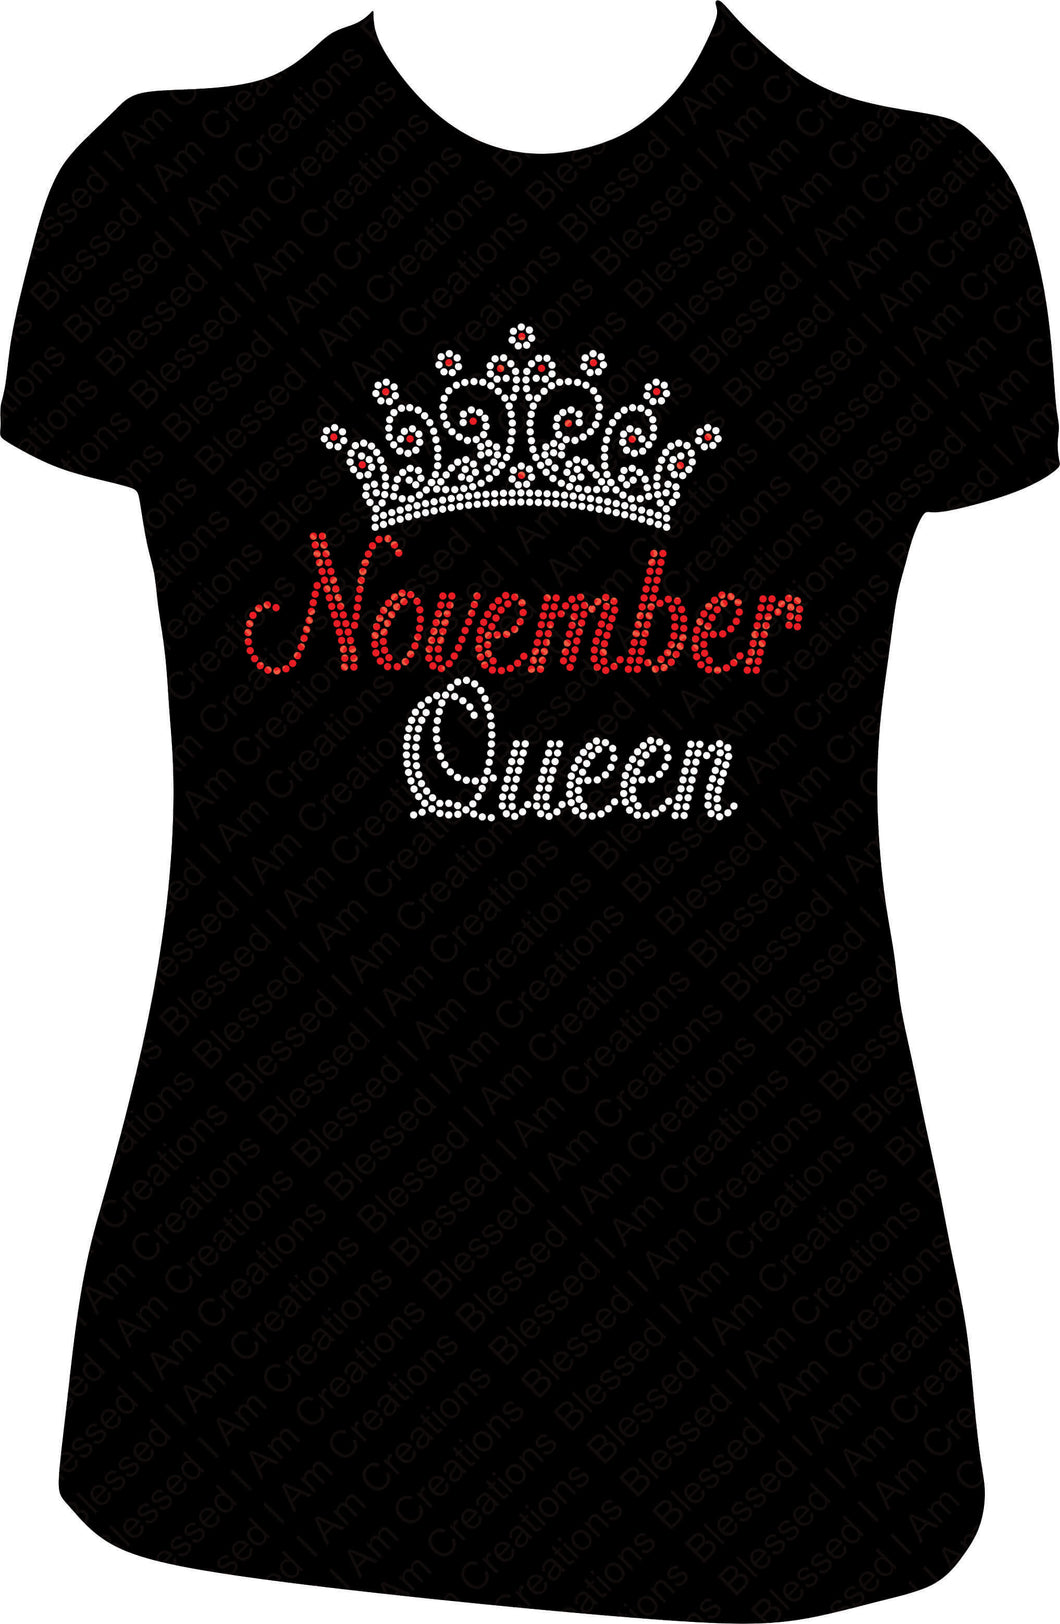 November Queen rhinestone shirt, November birthday shirt, November bling shirt, rhinestone birthday shirt, bling birthday shirt, 